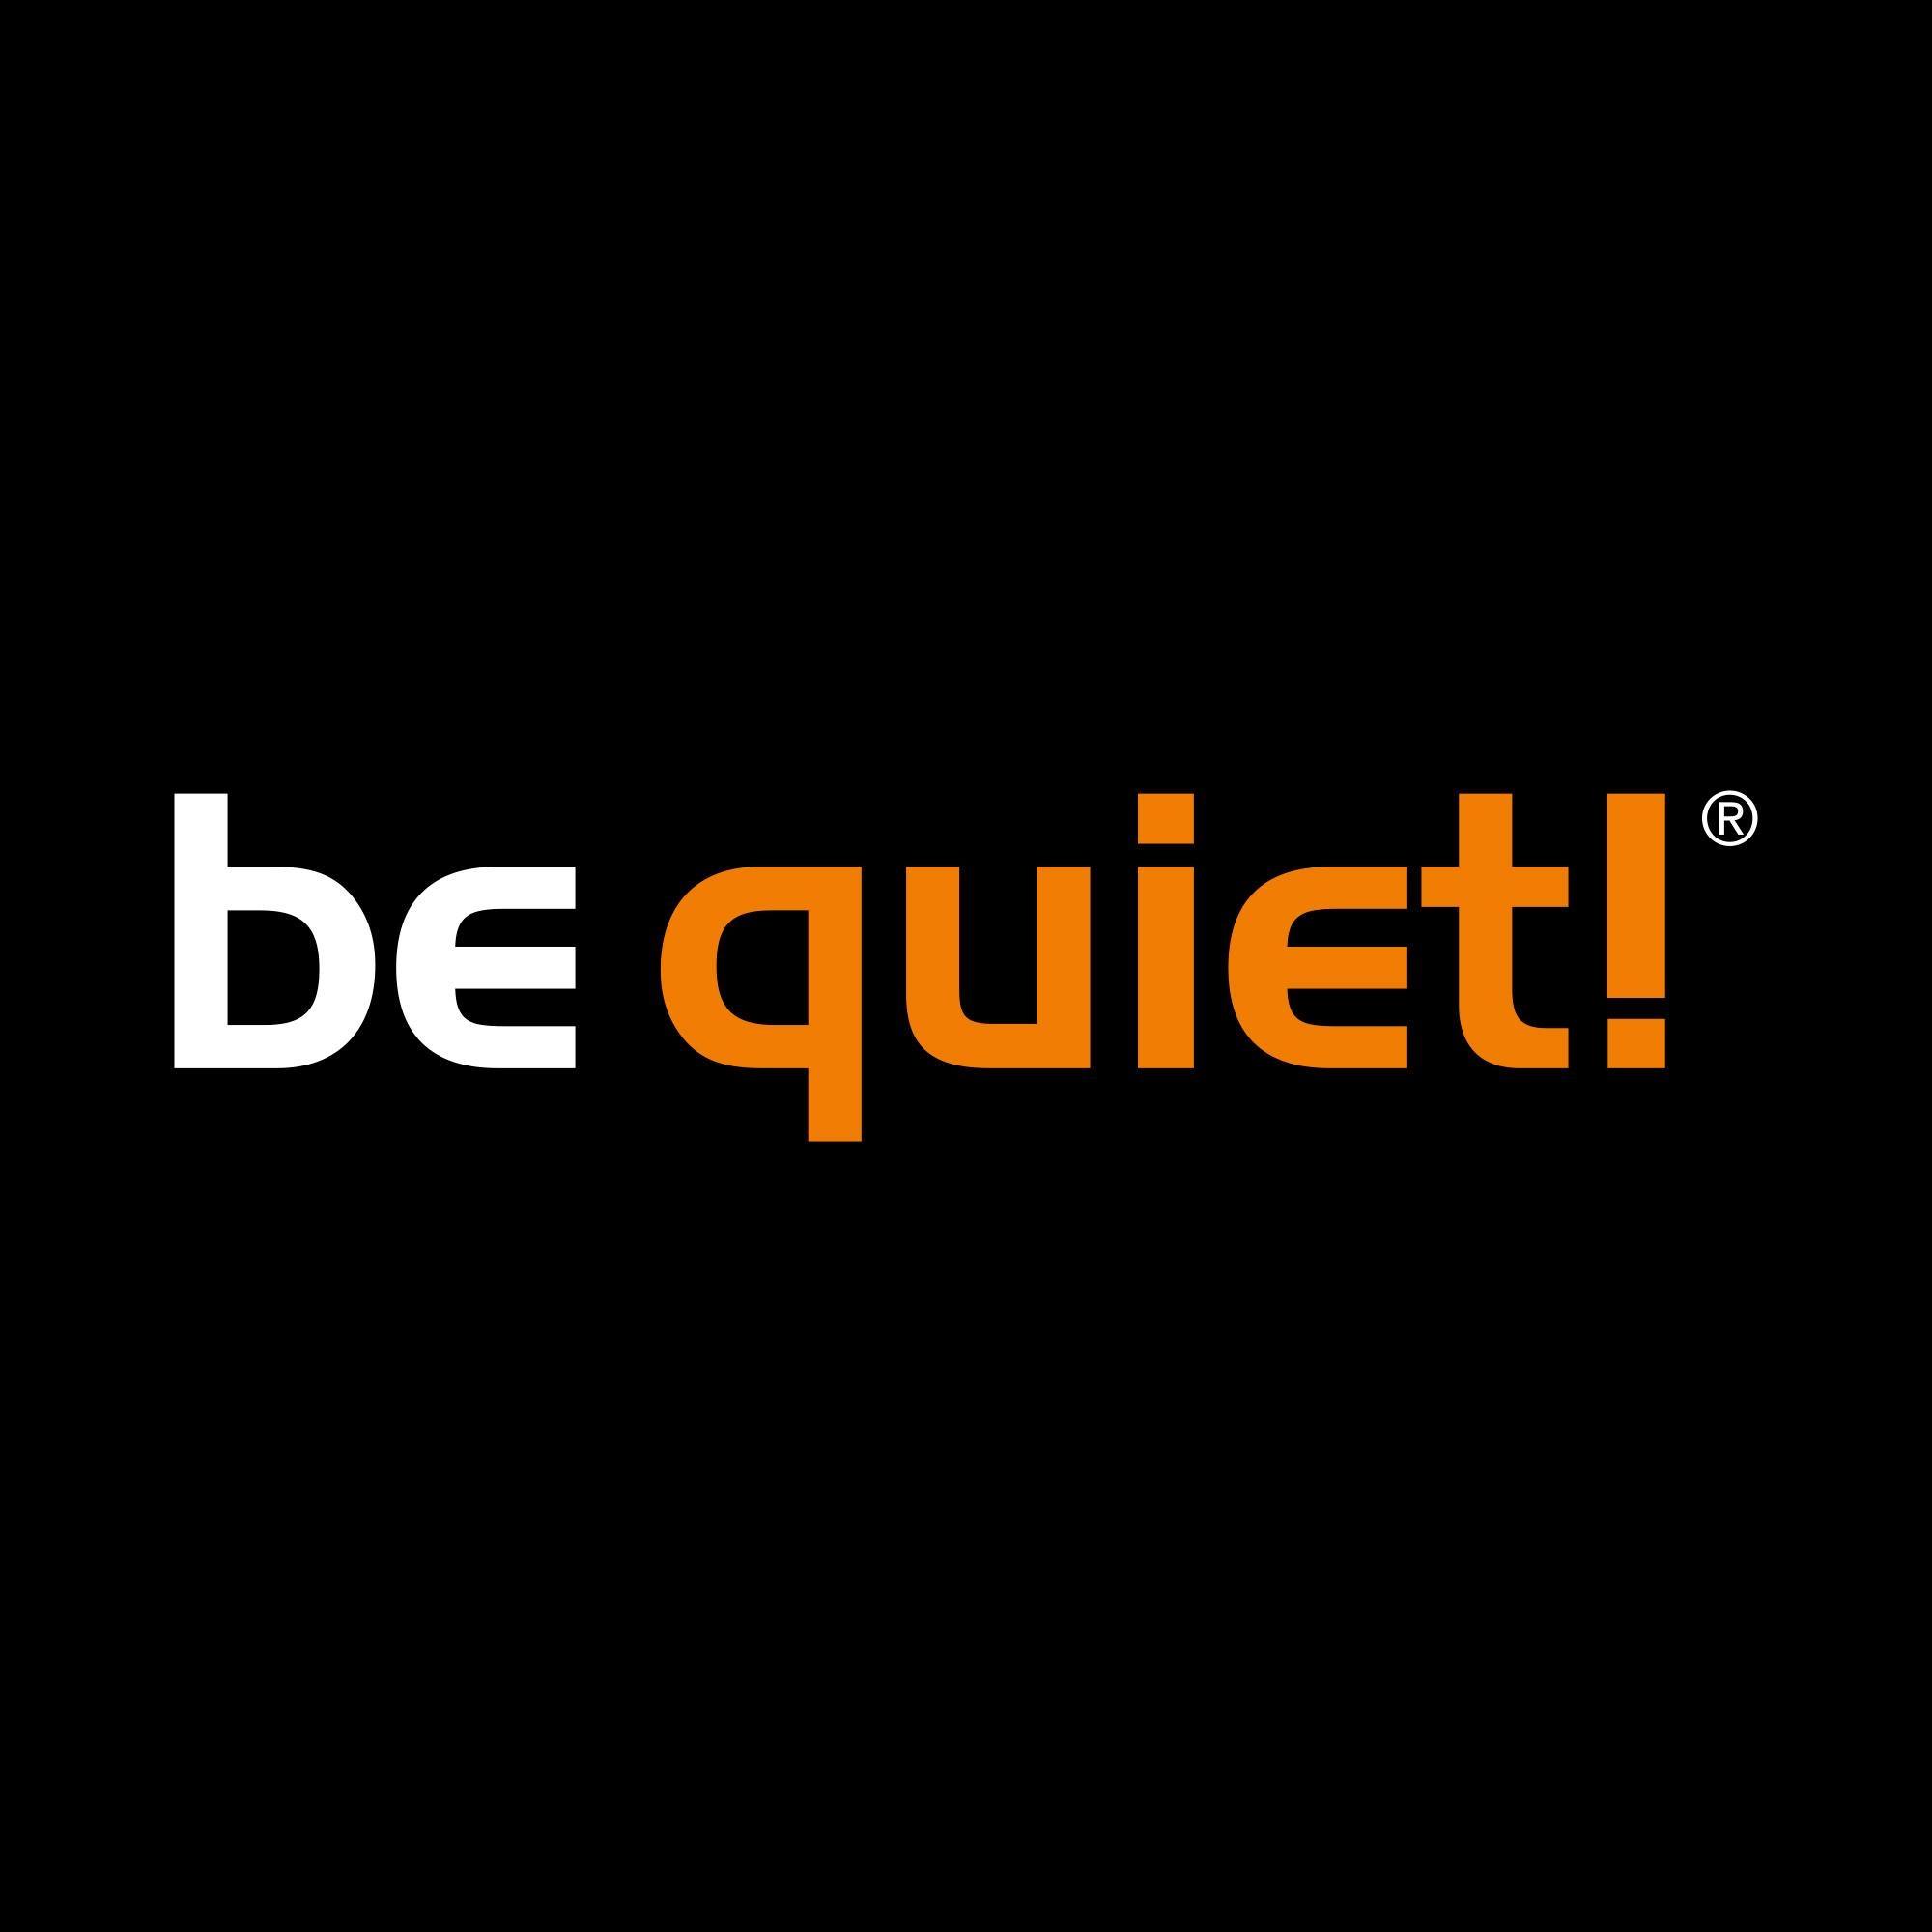 be quiet! 